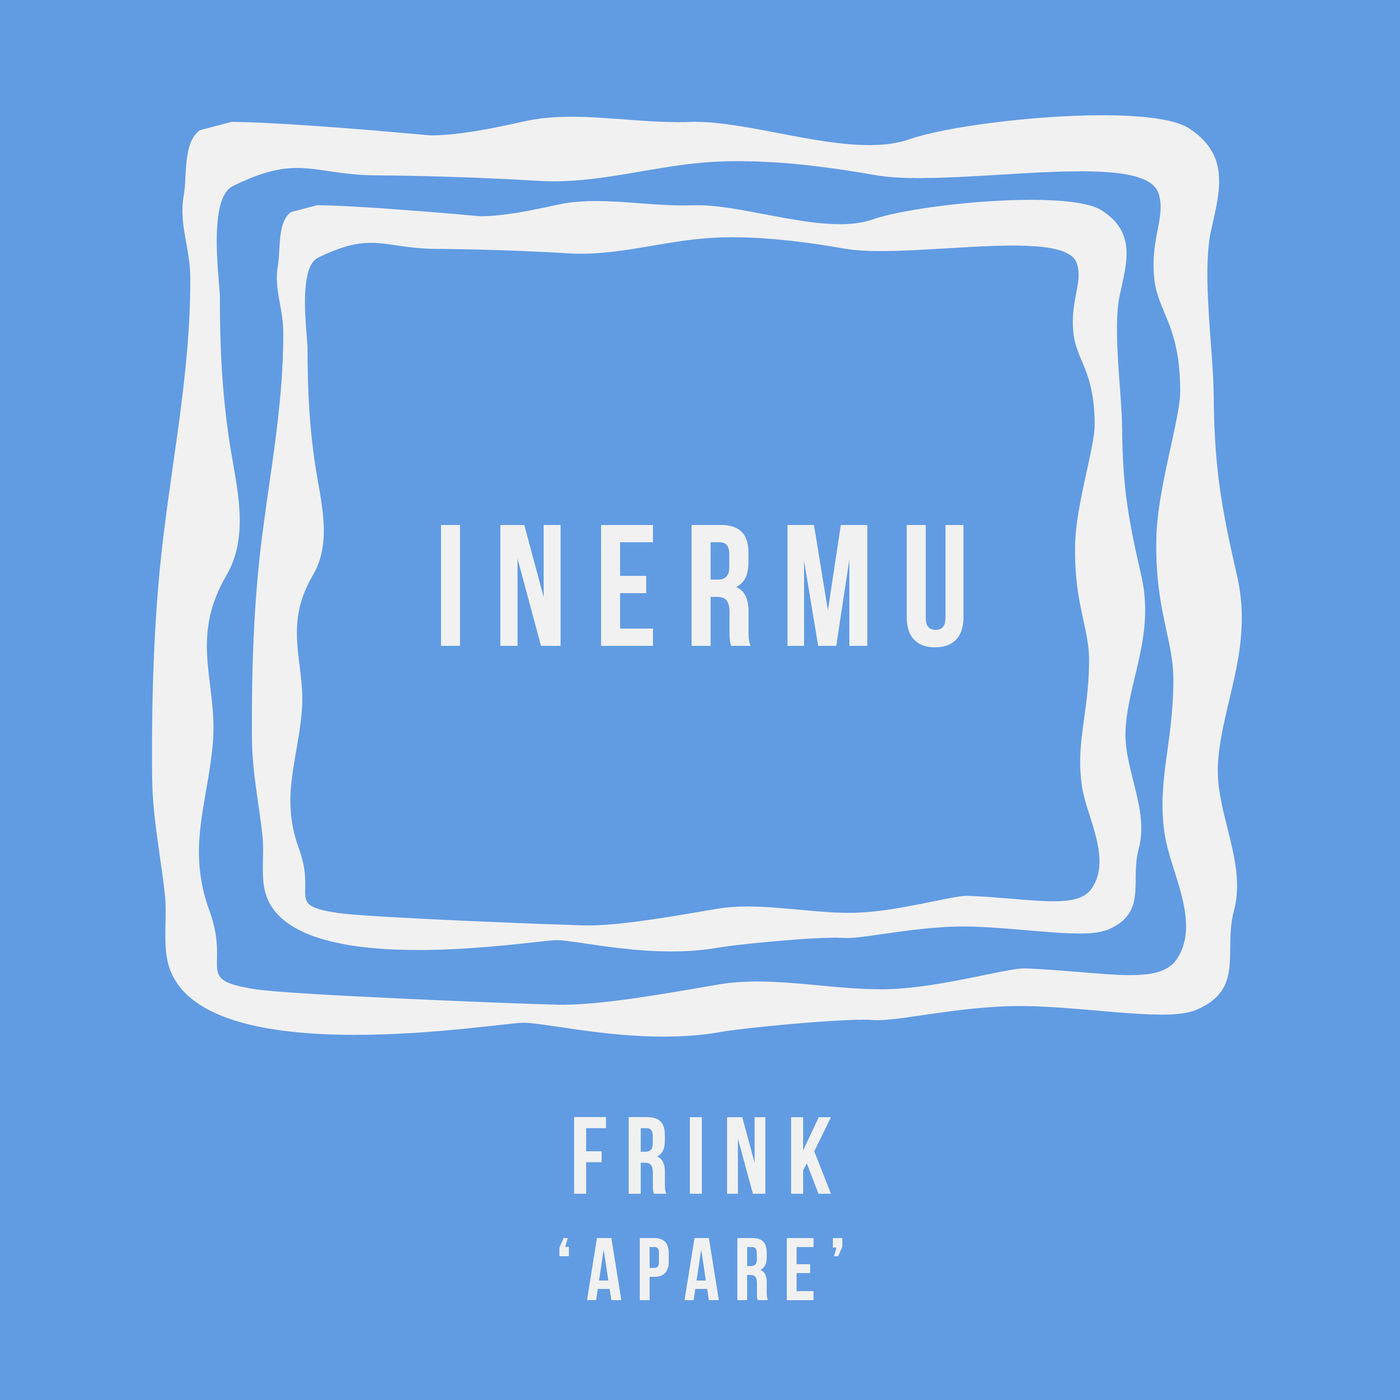 Frink - Apare / Inermu